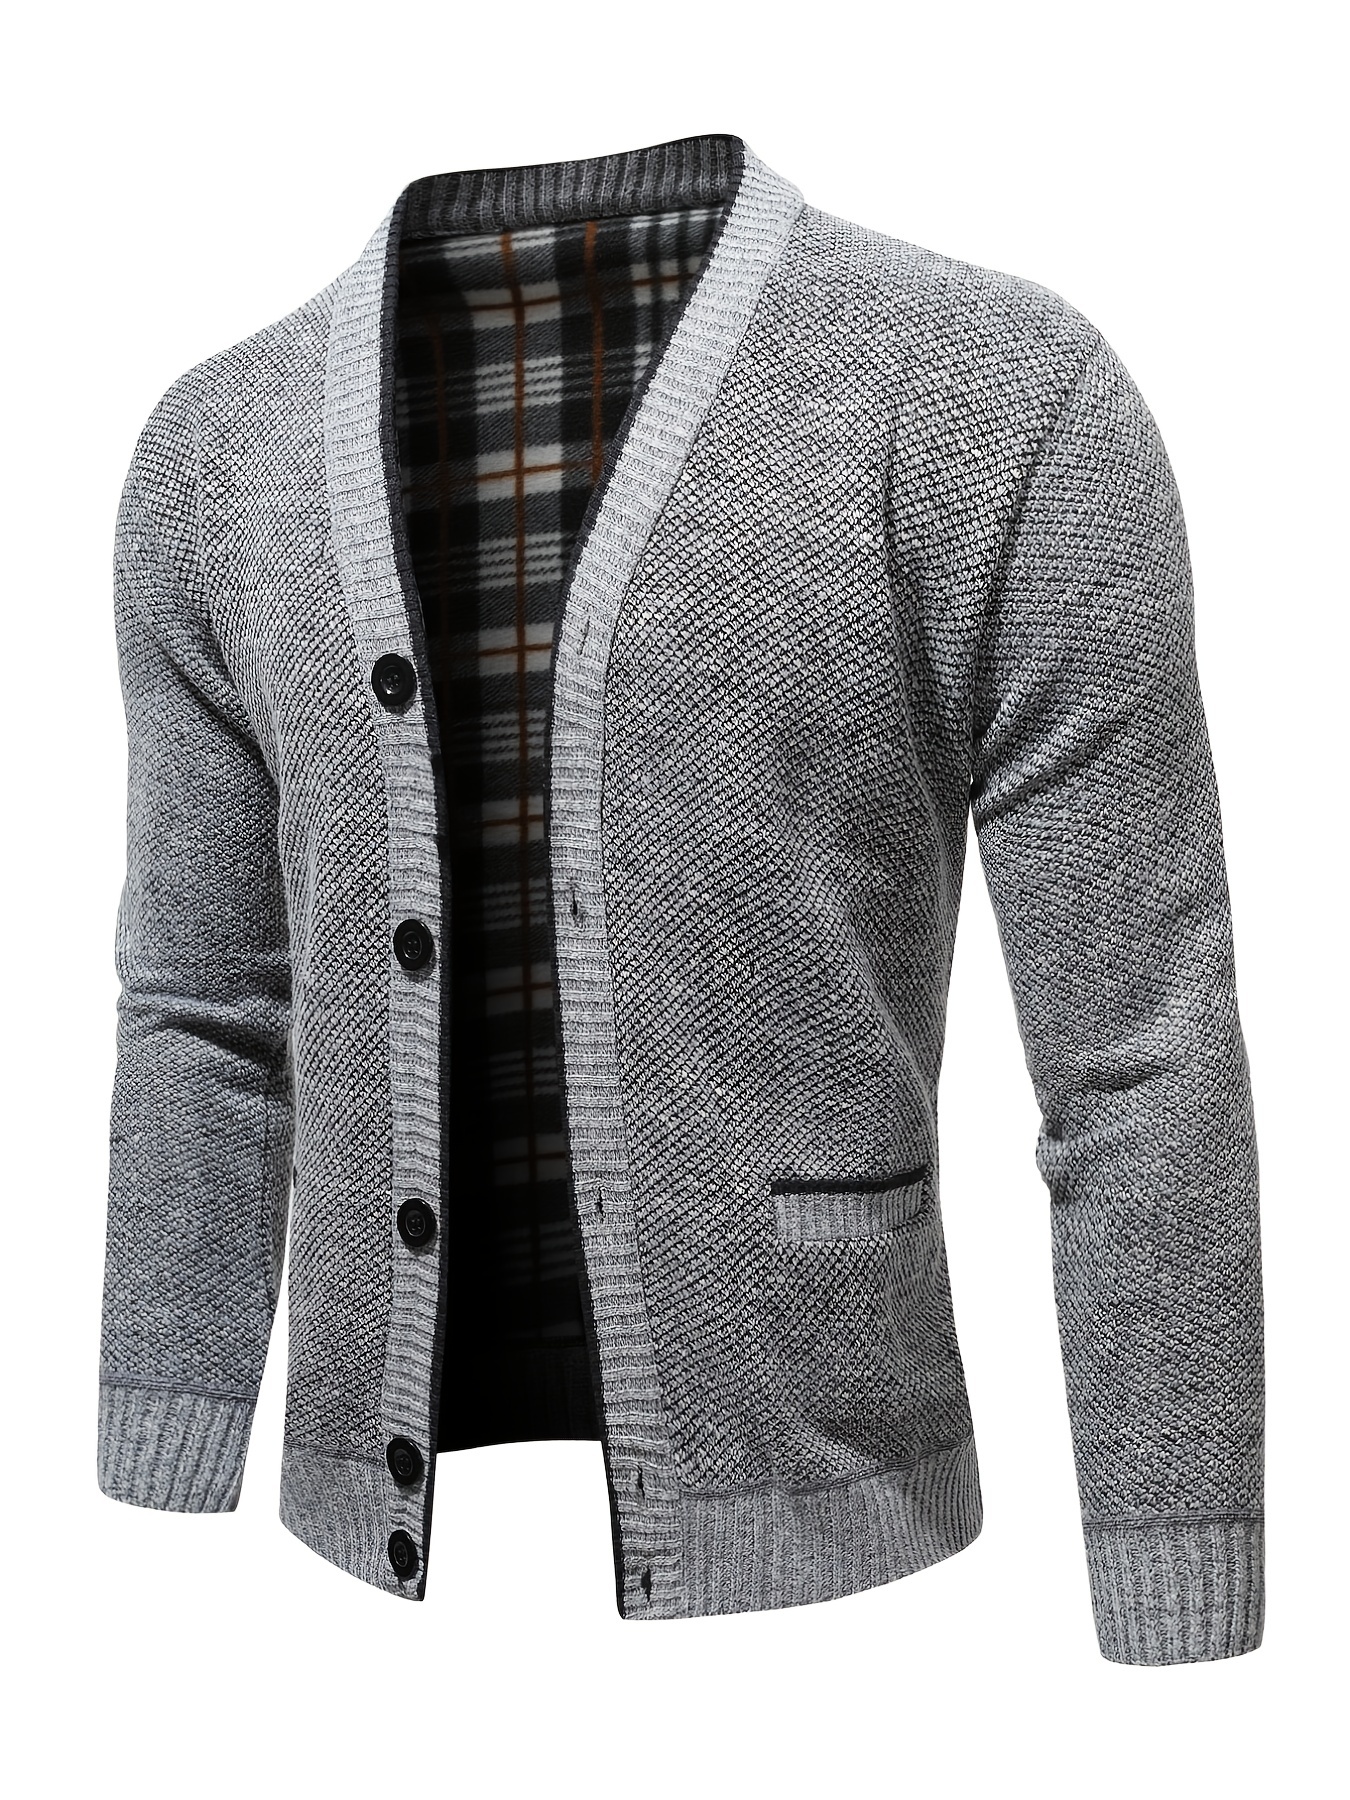 Men's Sweater Jackets & Cardigans Sweaters